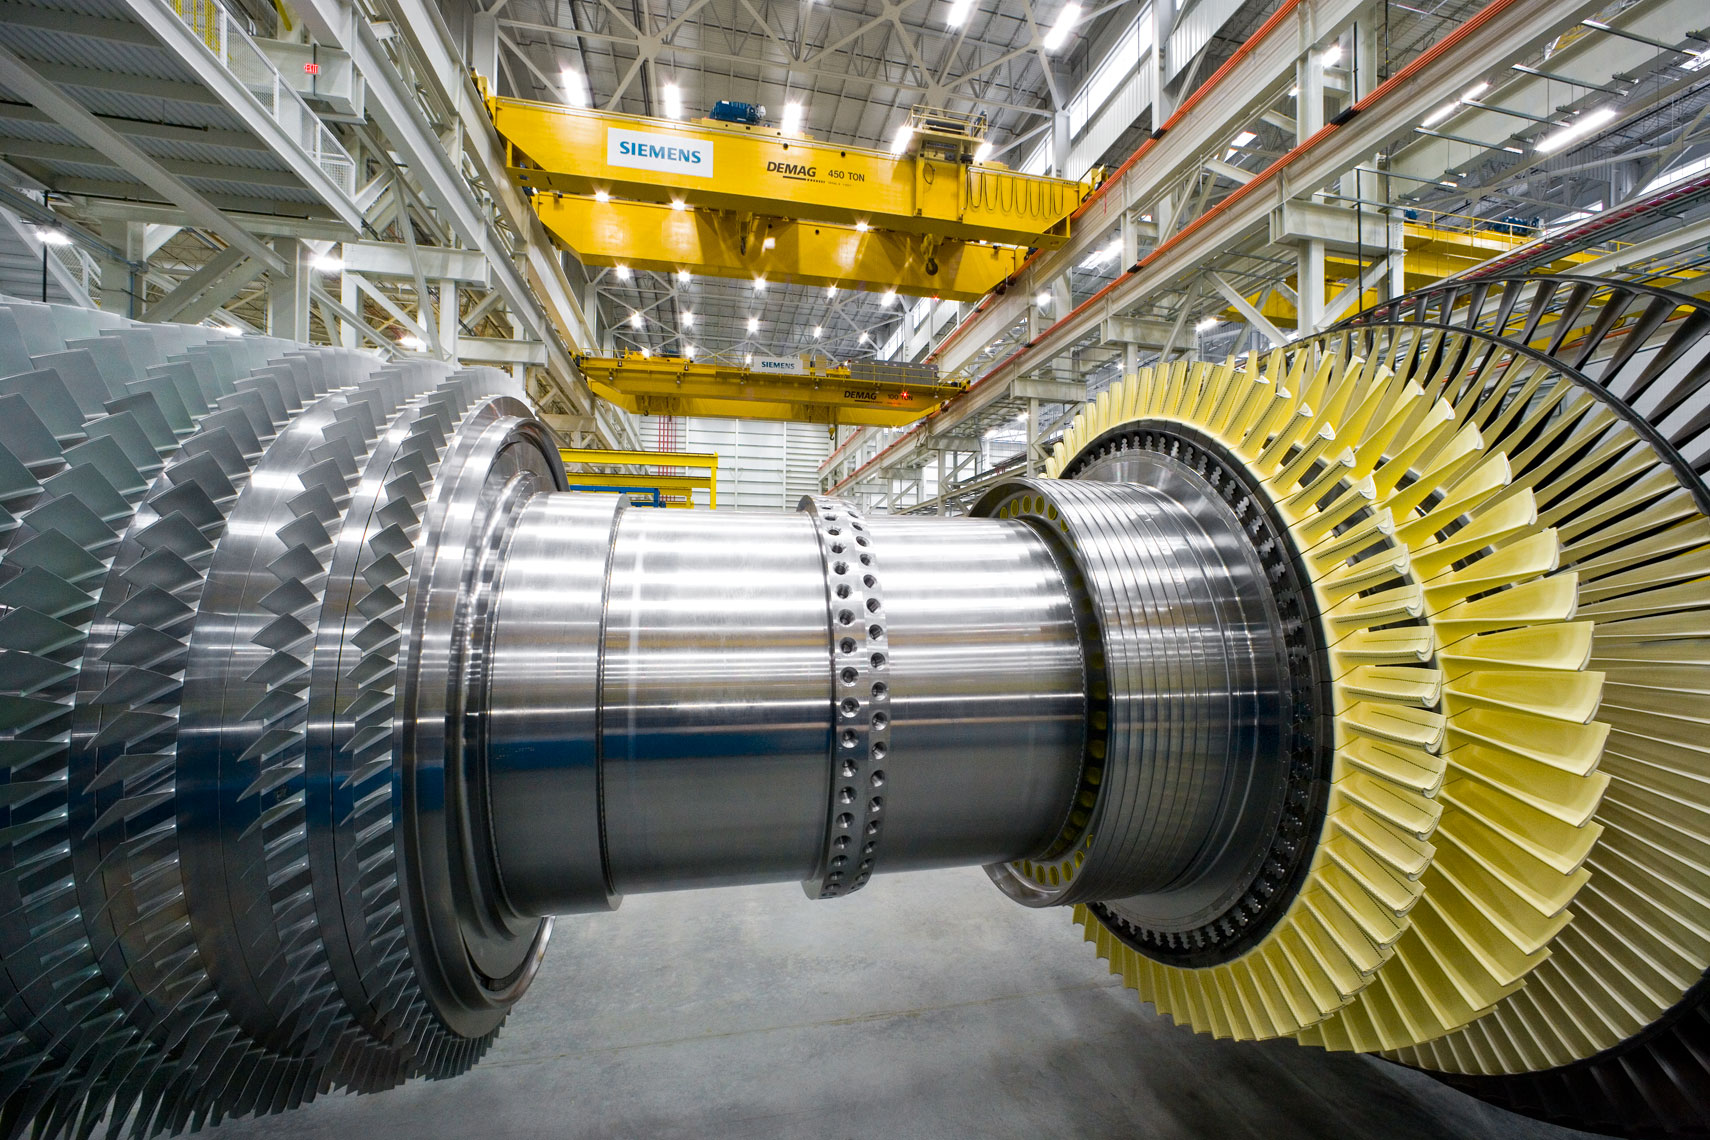 detail of gas turbine rotor at Siemens